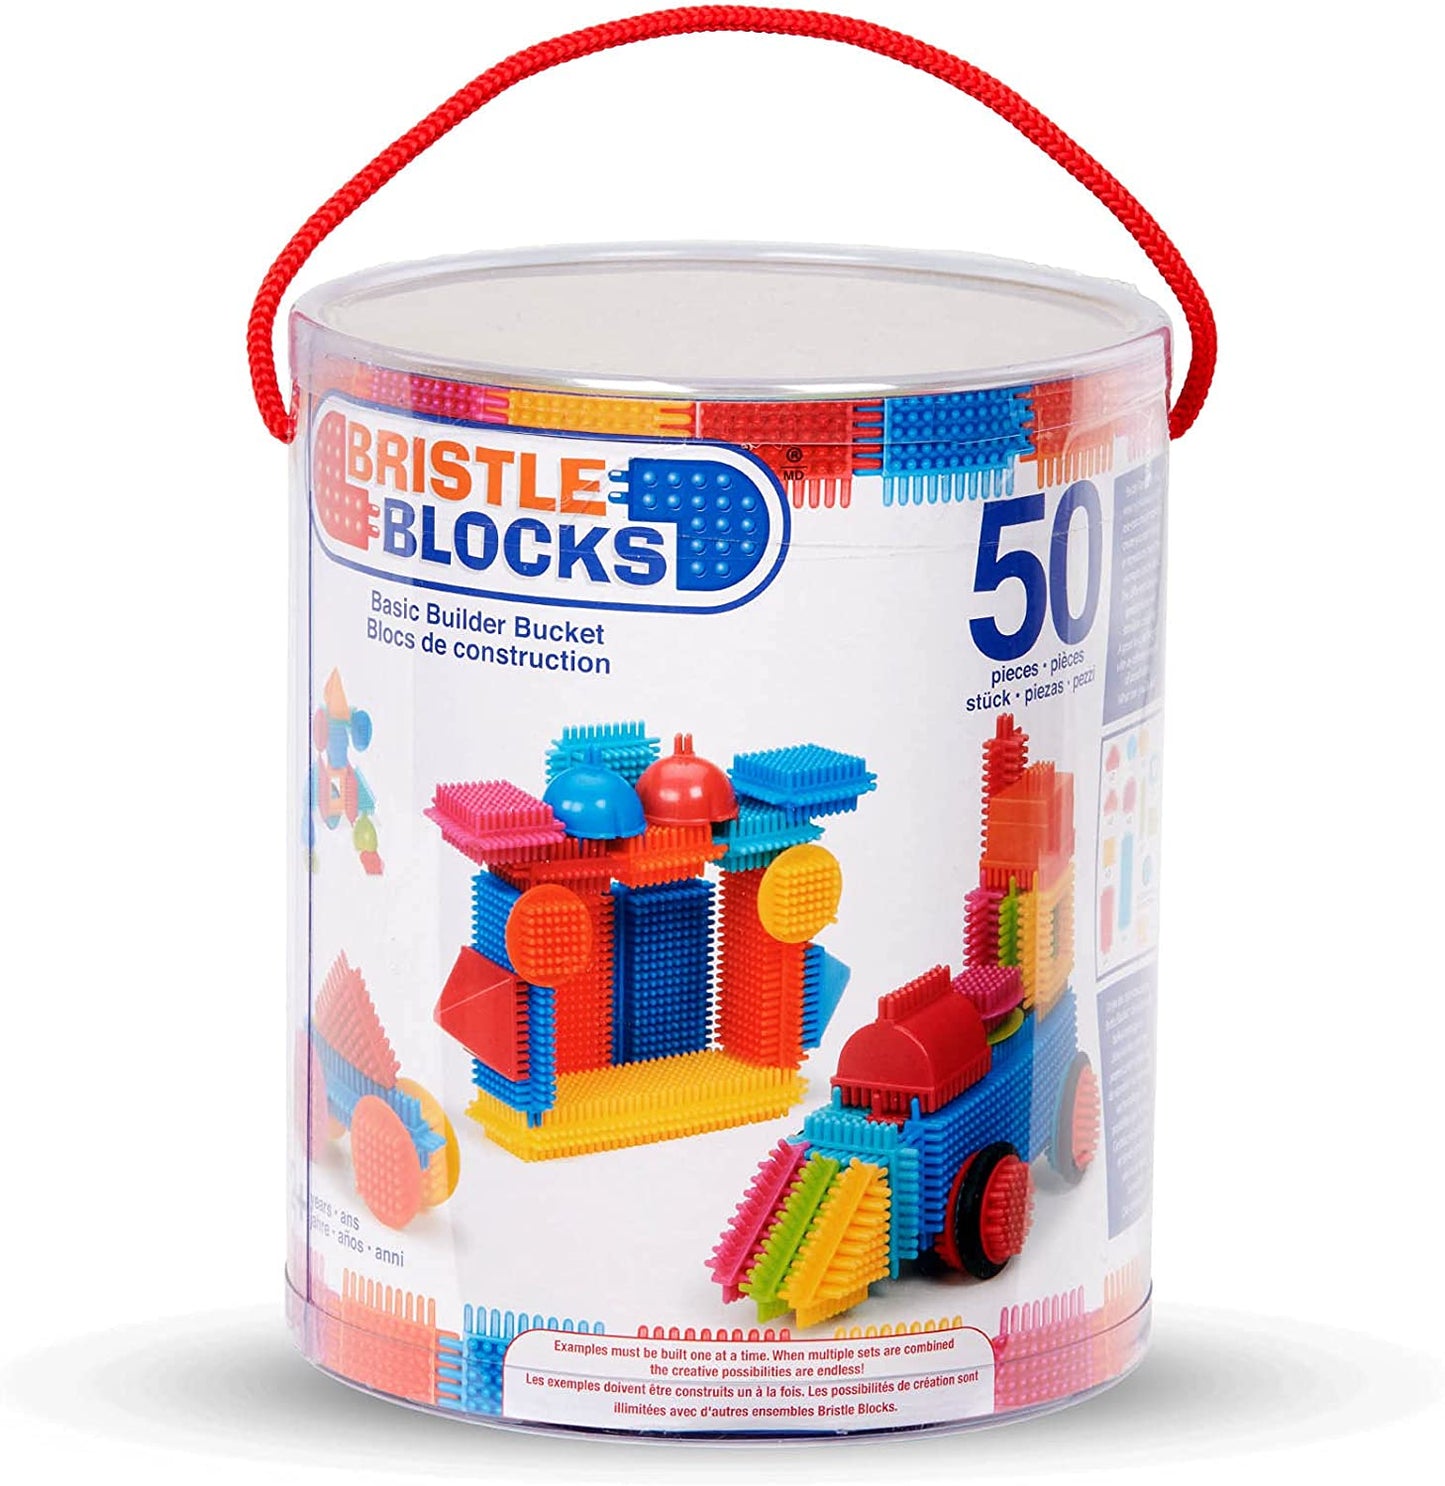 [Bristle Blocks by Battat] 50Pcs Construction Basic Builder Blocks in Bucket | STEM Creativity Building Toys